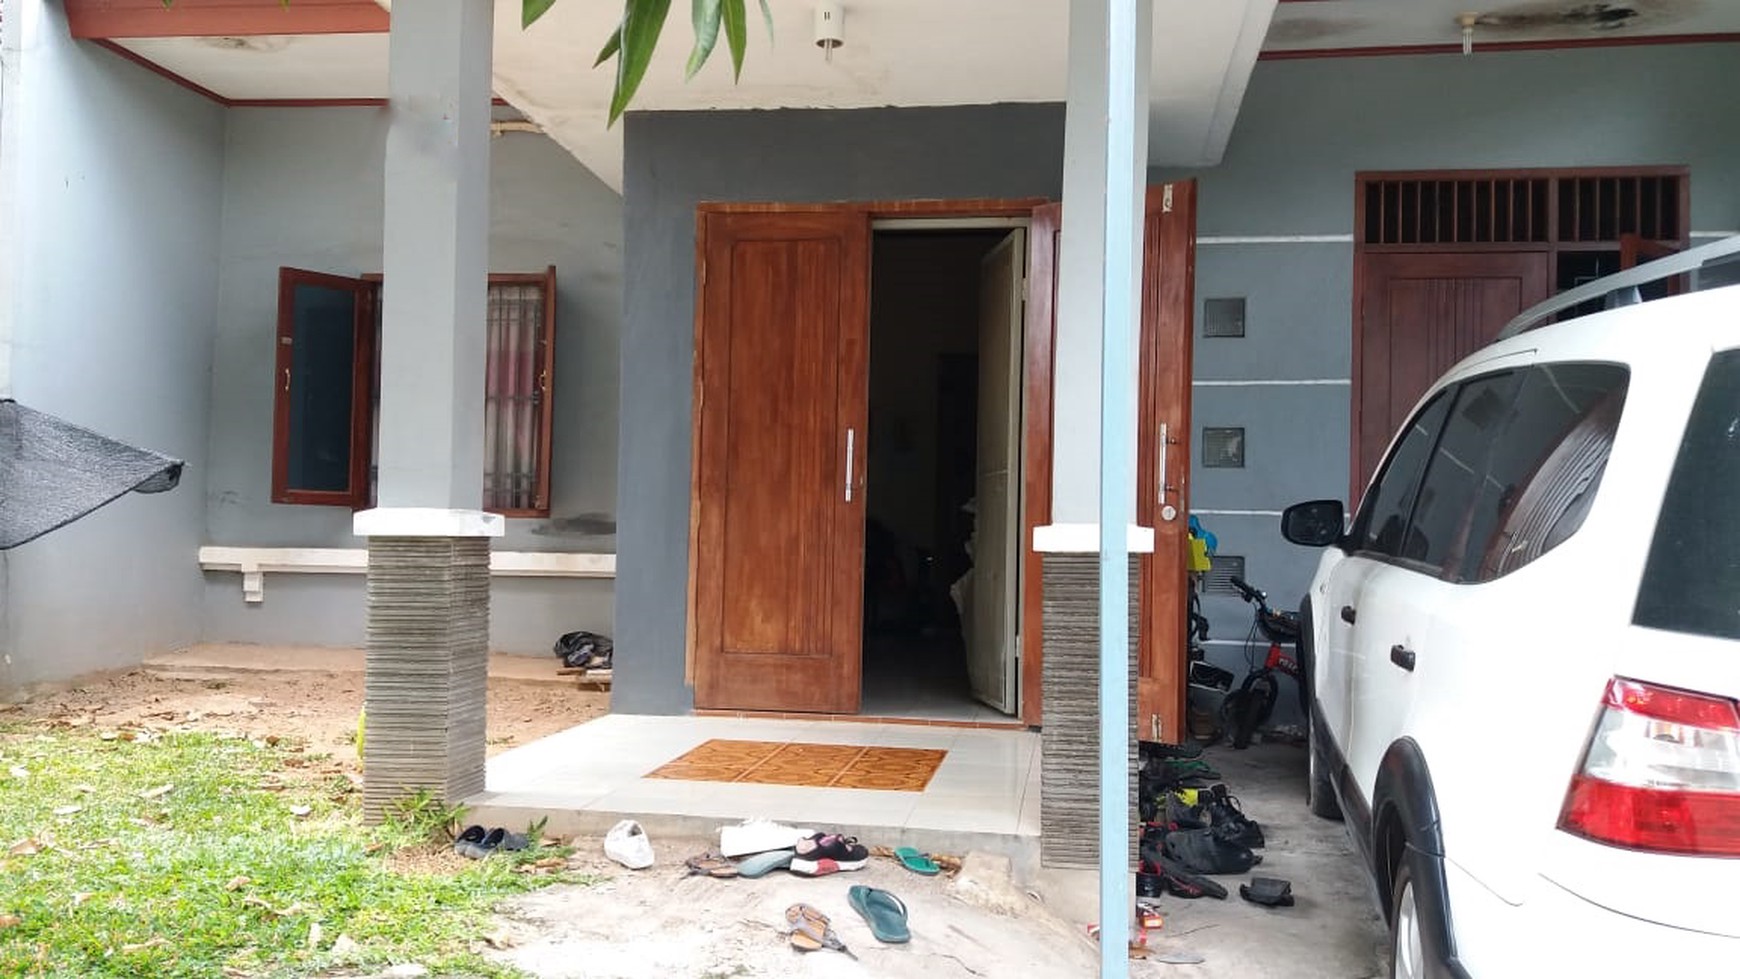 Rumah bagus di Bintaro Nyaman dan Siap Huni di kawasan Graha Bintaro Tangerang Selatan